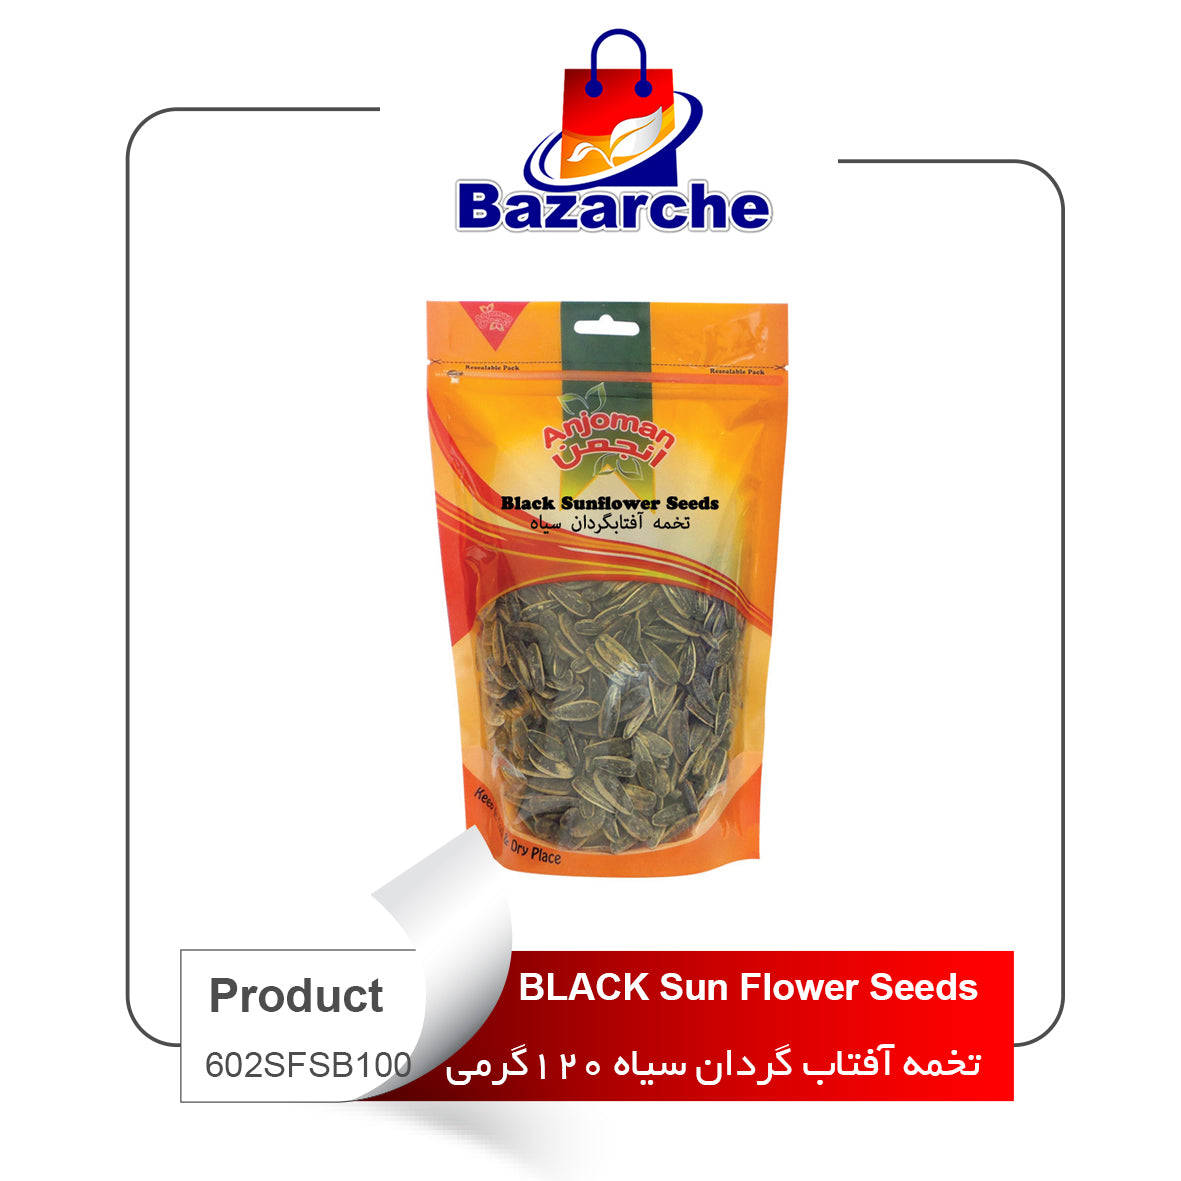 BLACK Sun Flower Seeds      120g(تخمه آفتابگردان سیاه)